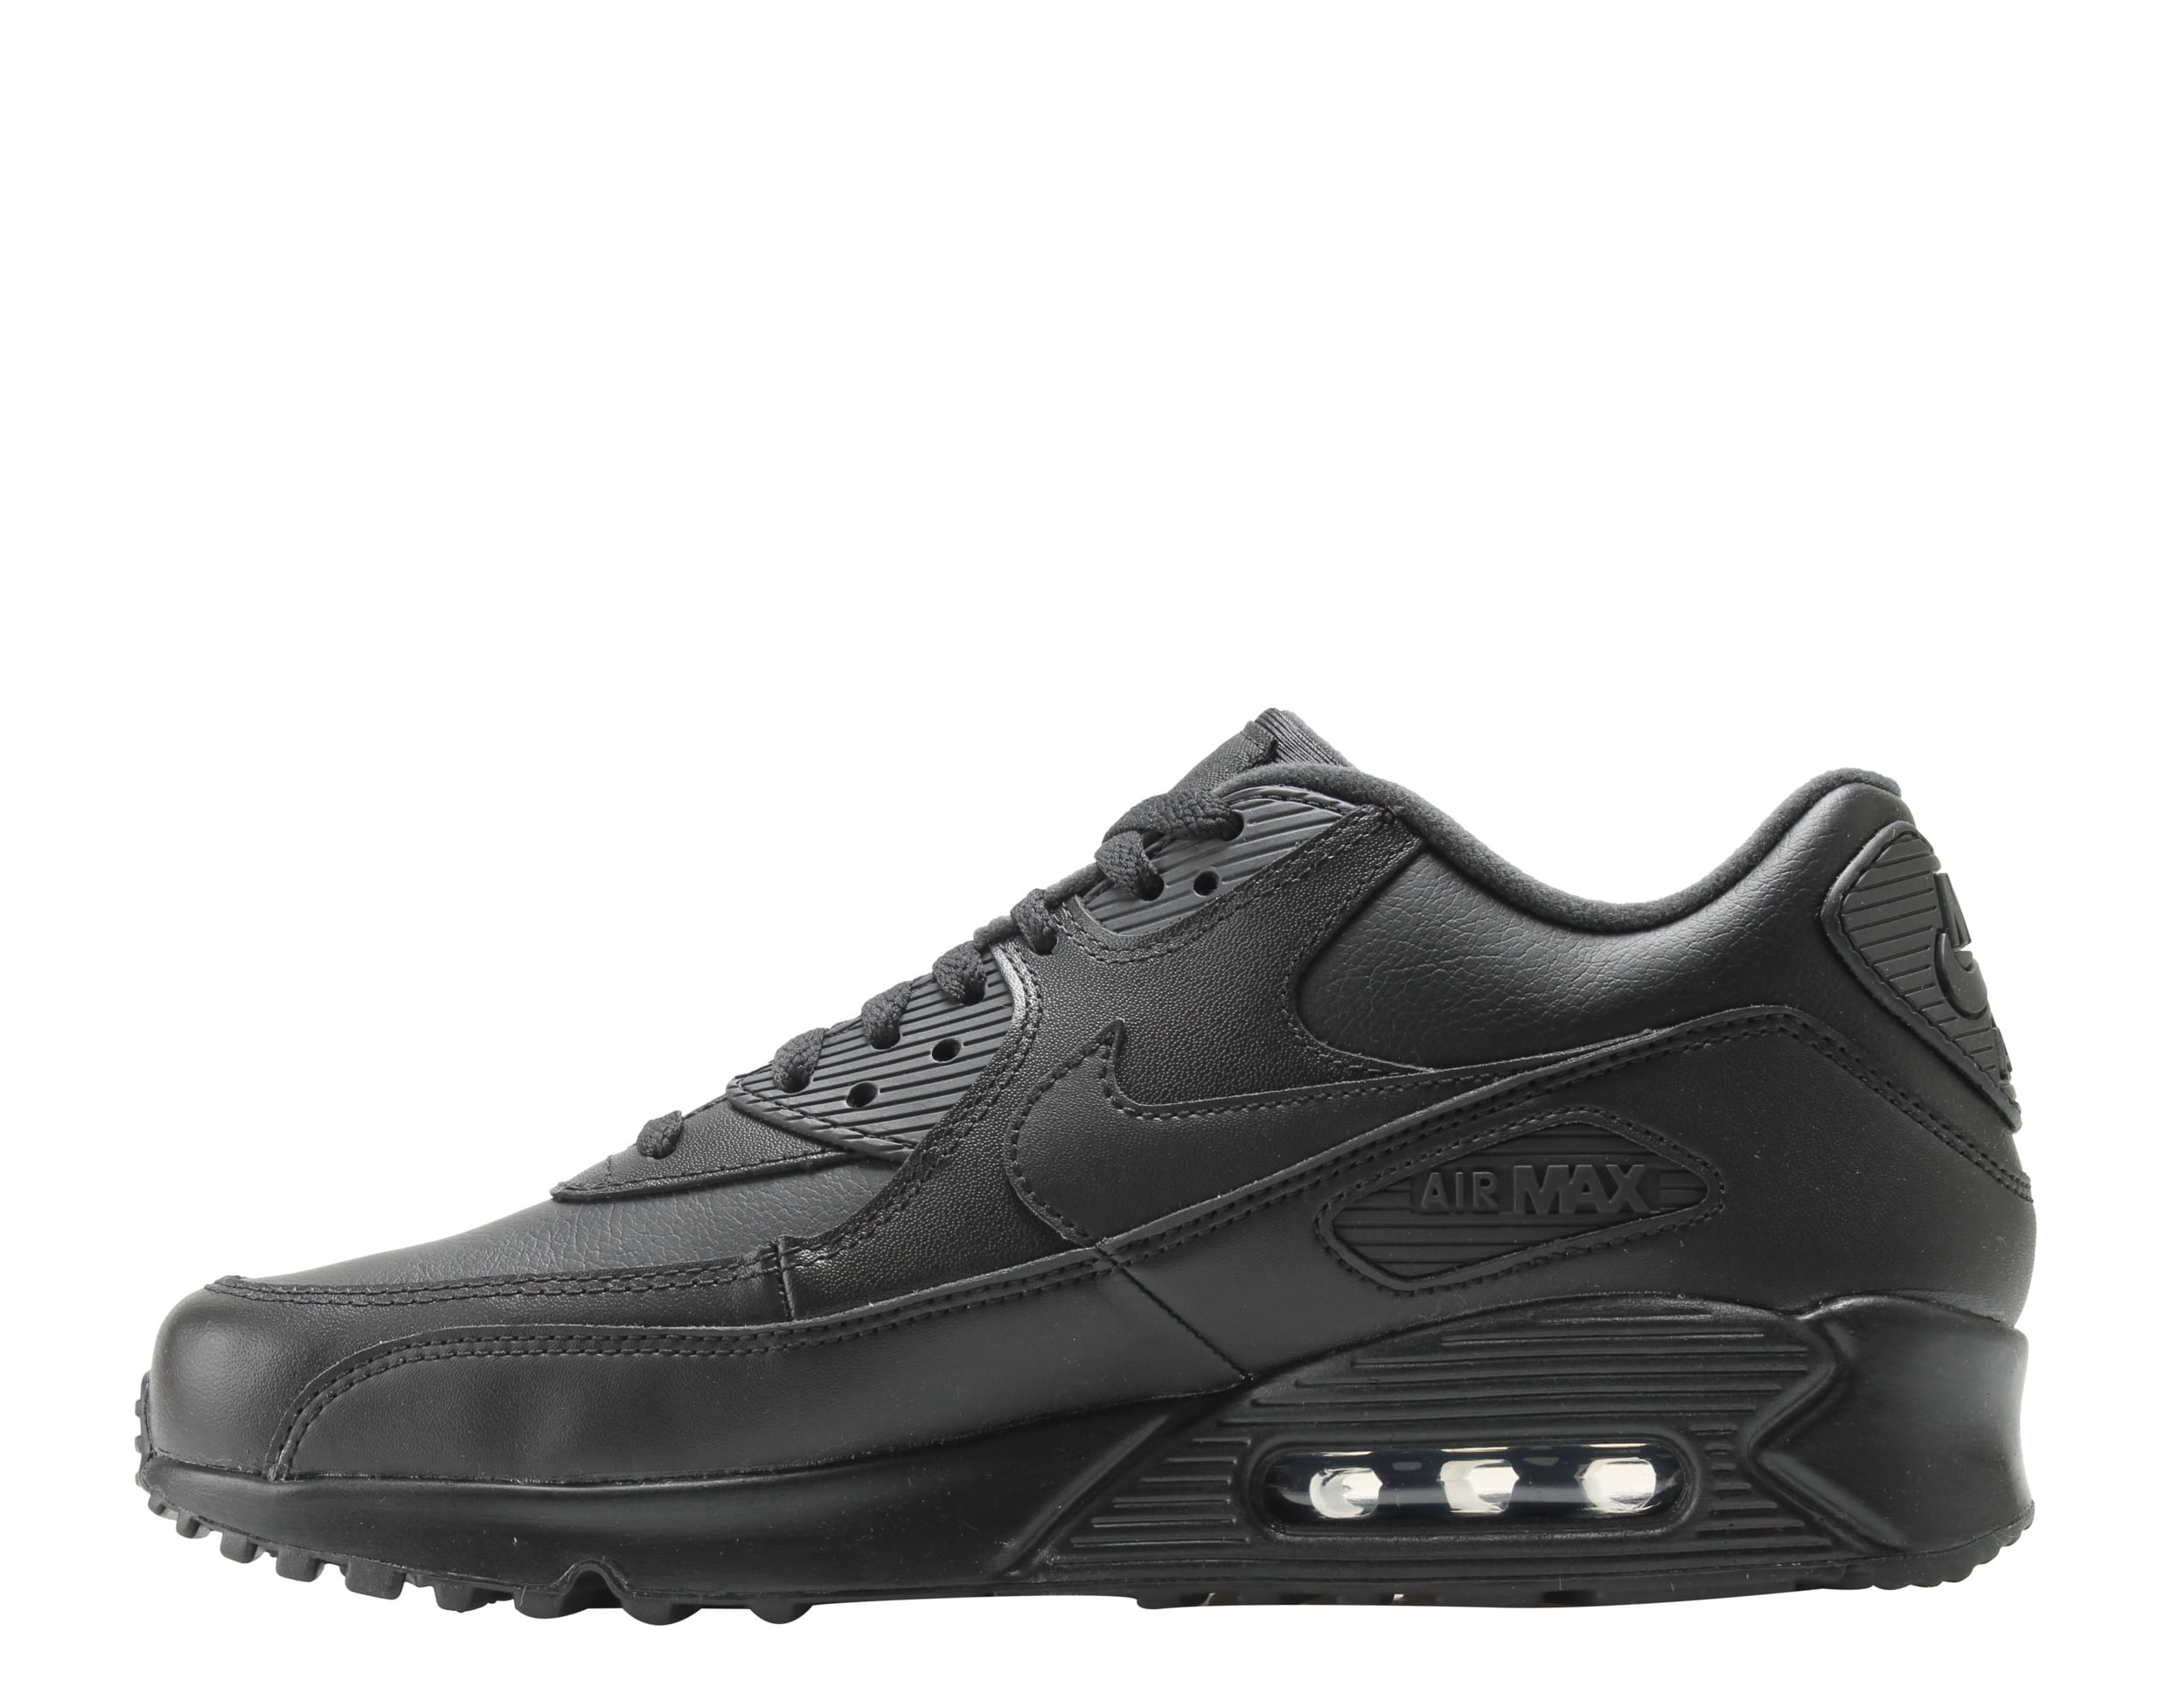 aantrekken Verhuizer gokken Nike Mens Air Max 90 Leather Running Shoes Black/Black 302519-001 Size 10 -  Walmart.com